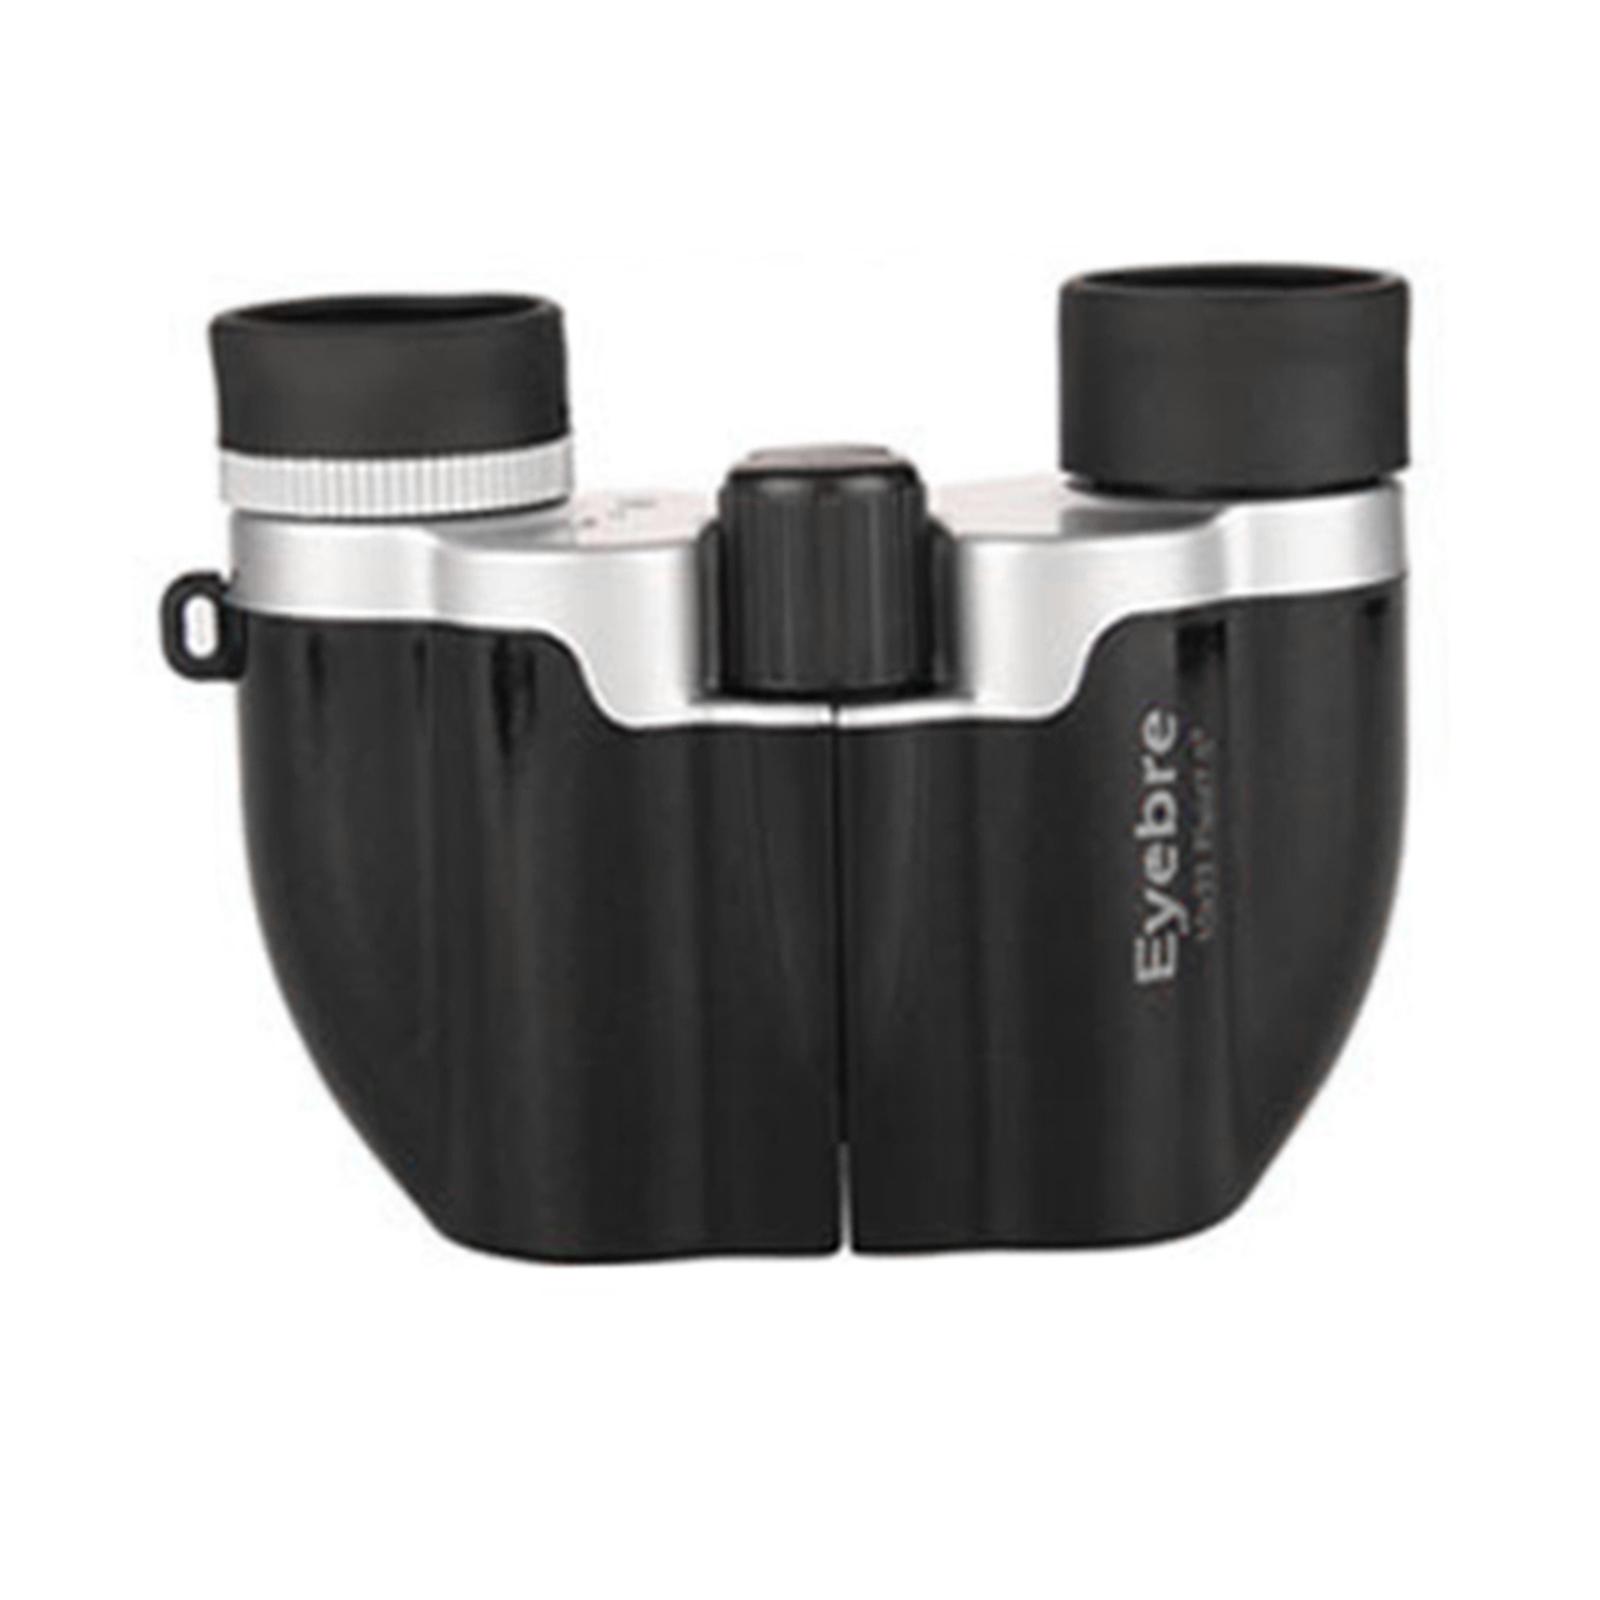 Binoculars Compact Lightweight Small for Bird Watching Outdoor Black